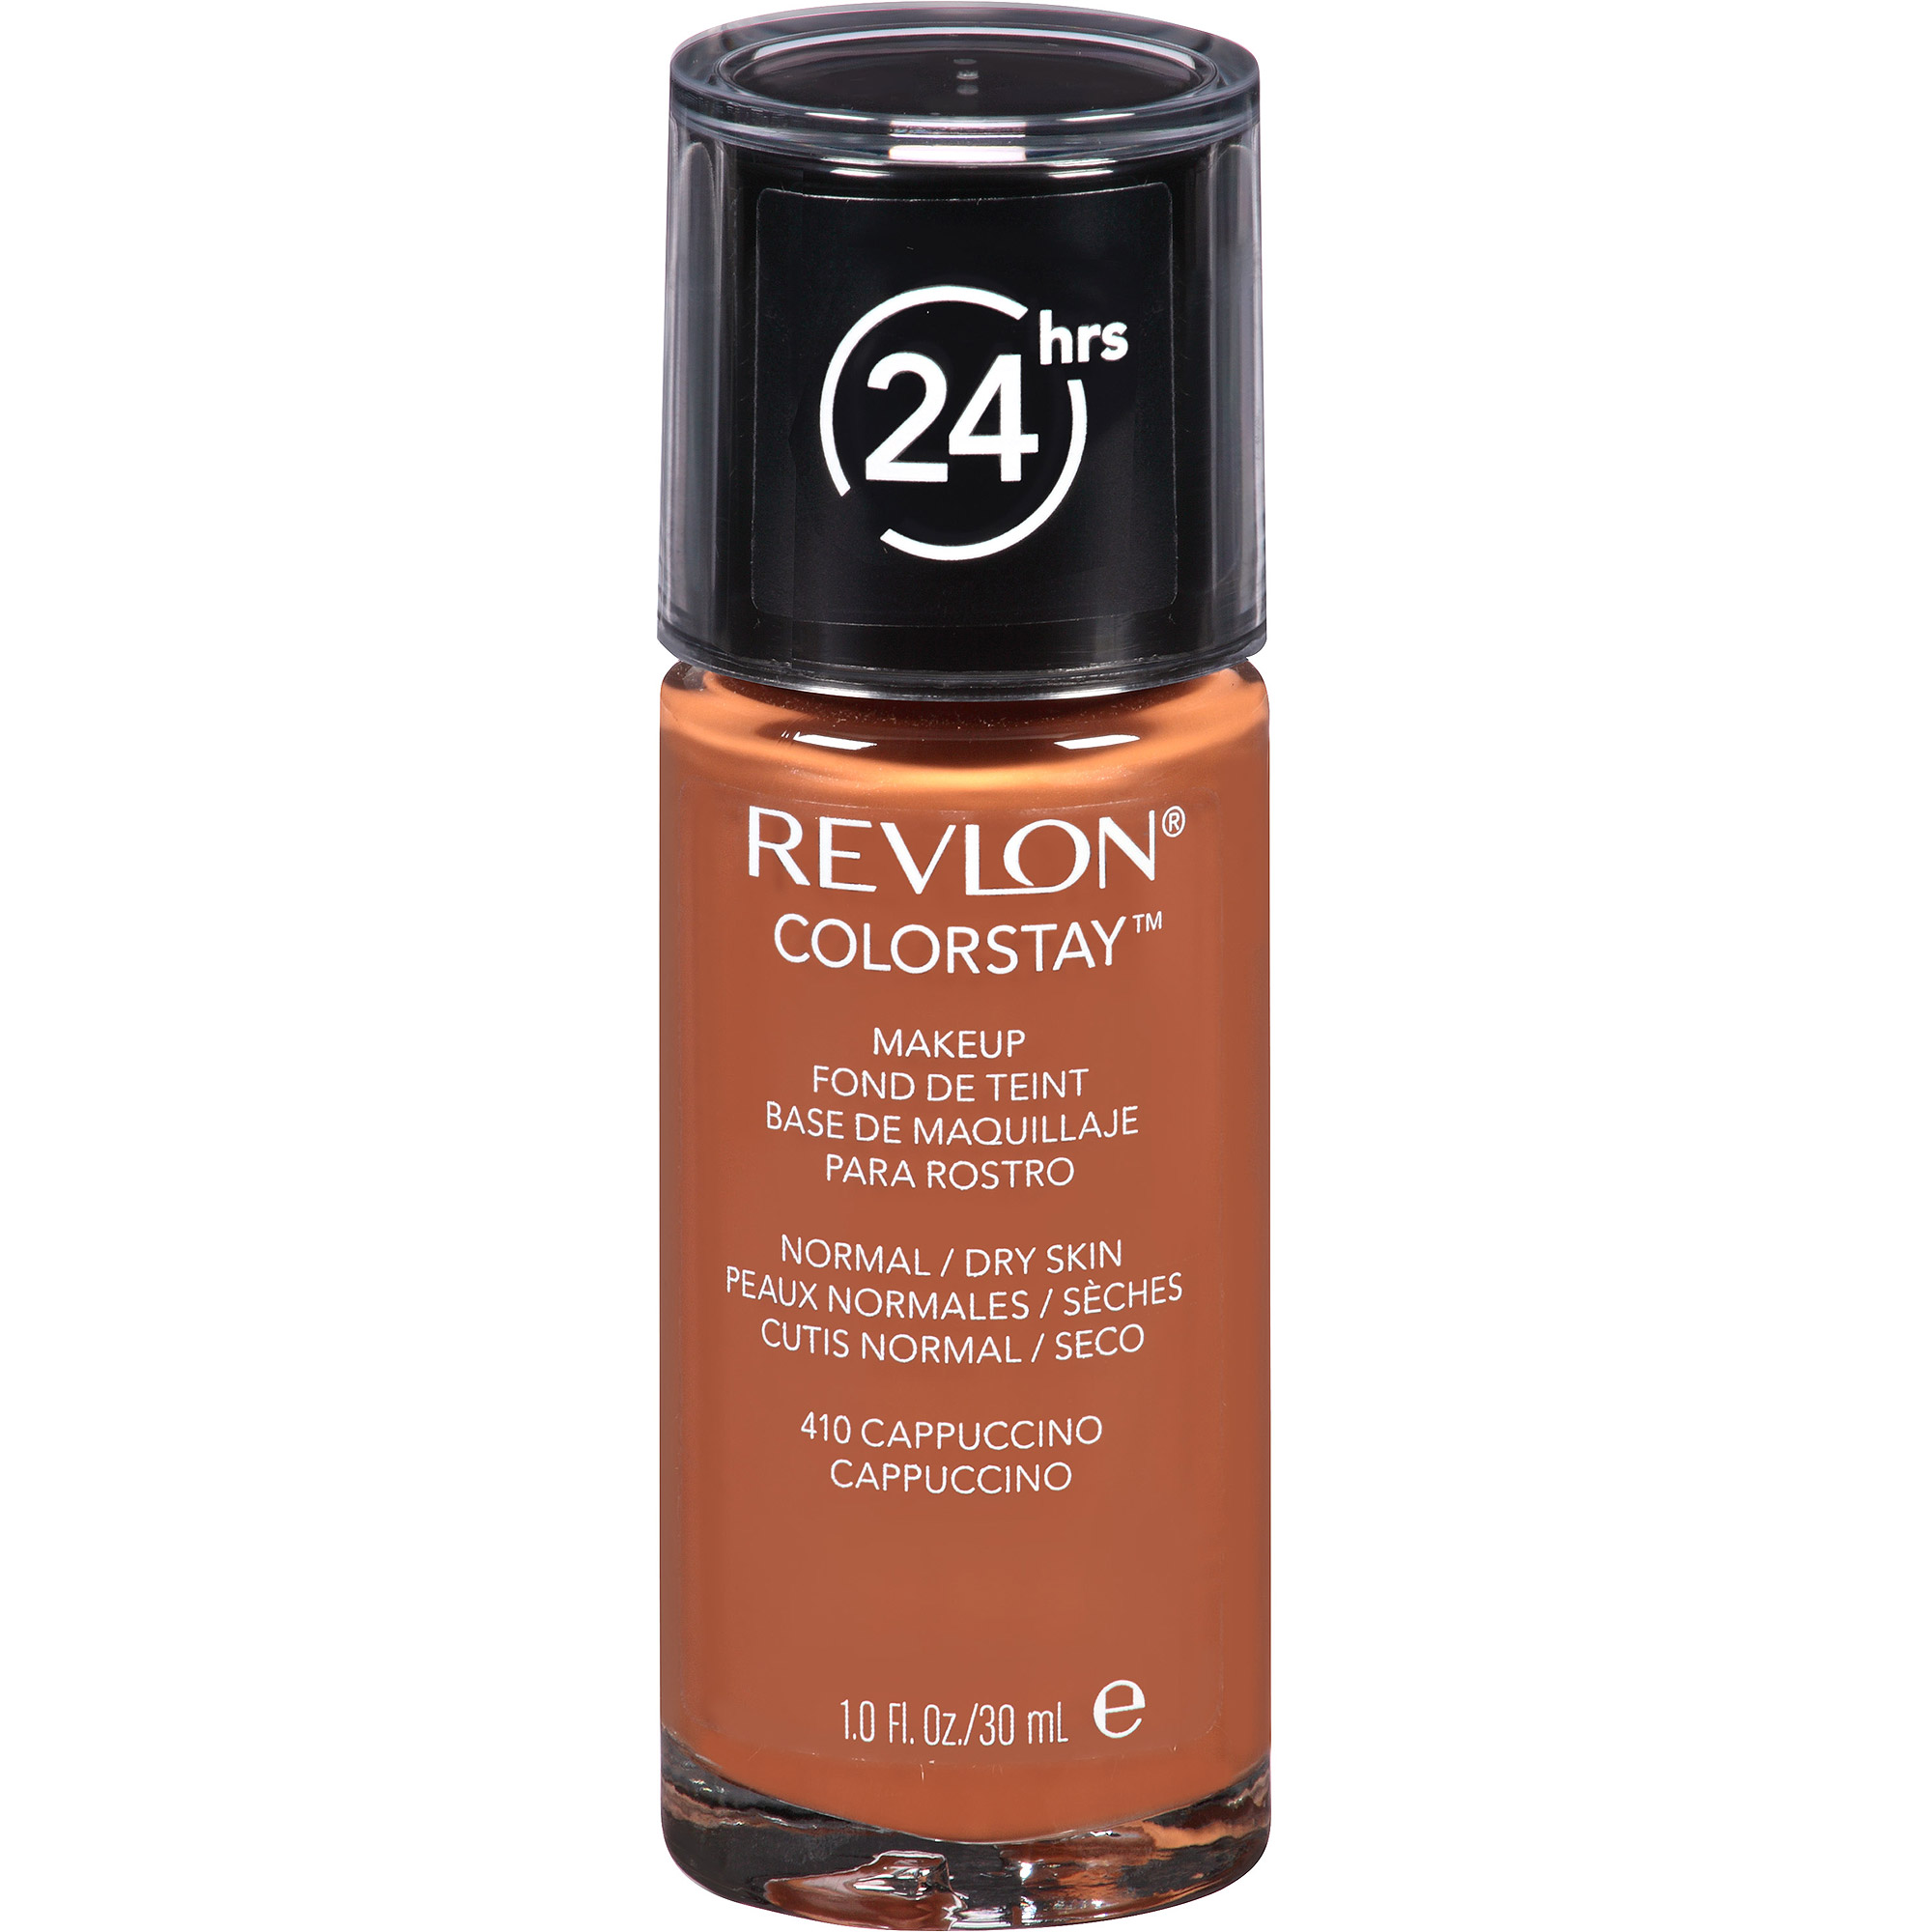 Revlon ColorStay Makeup for Normal/Dry Skin